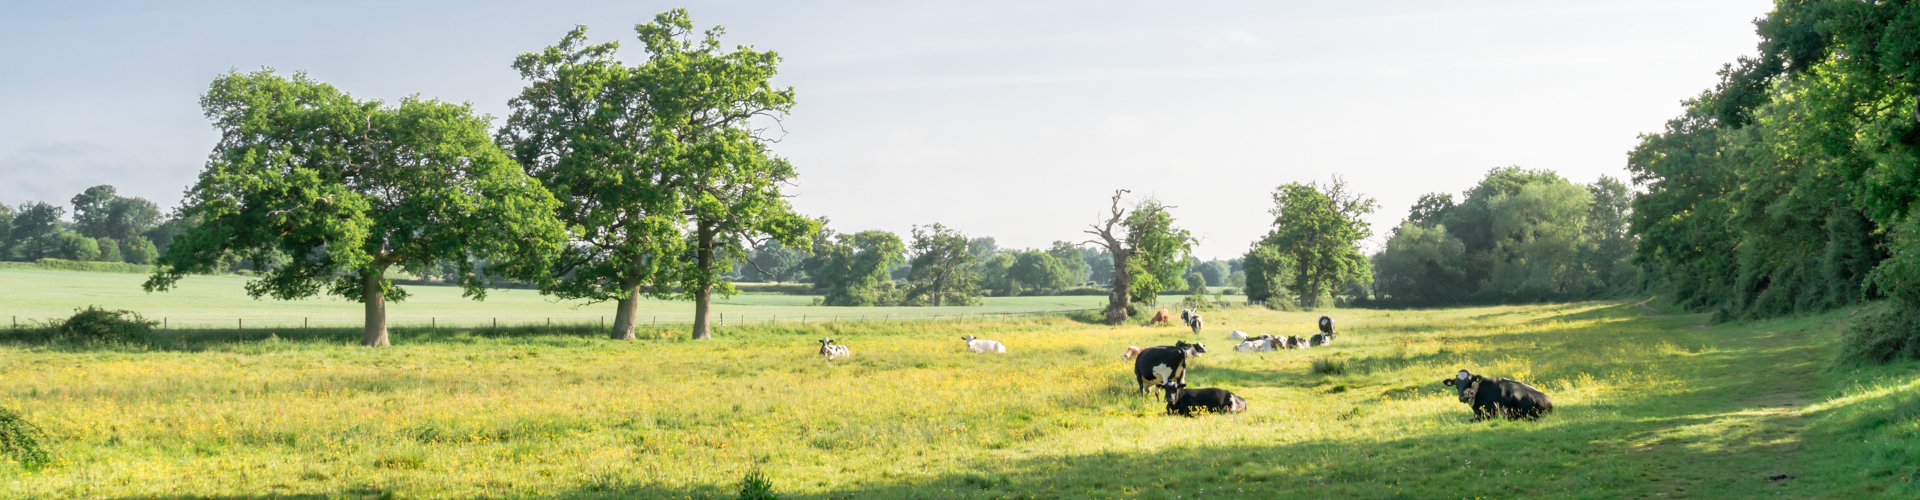 Cows in a field near Mortimer